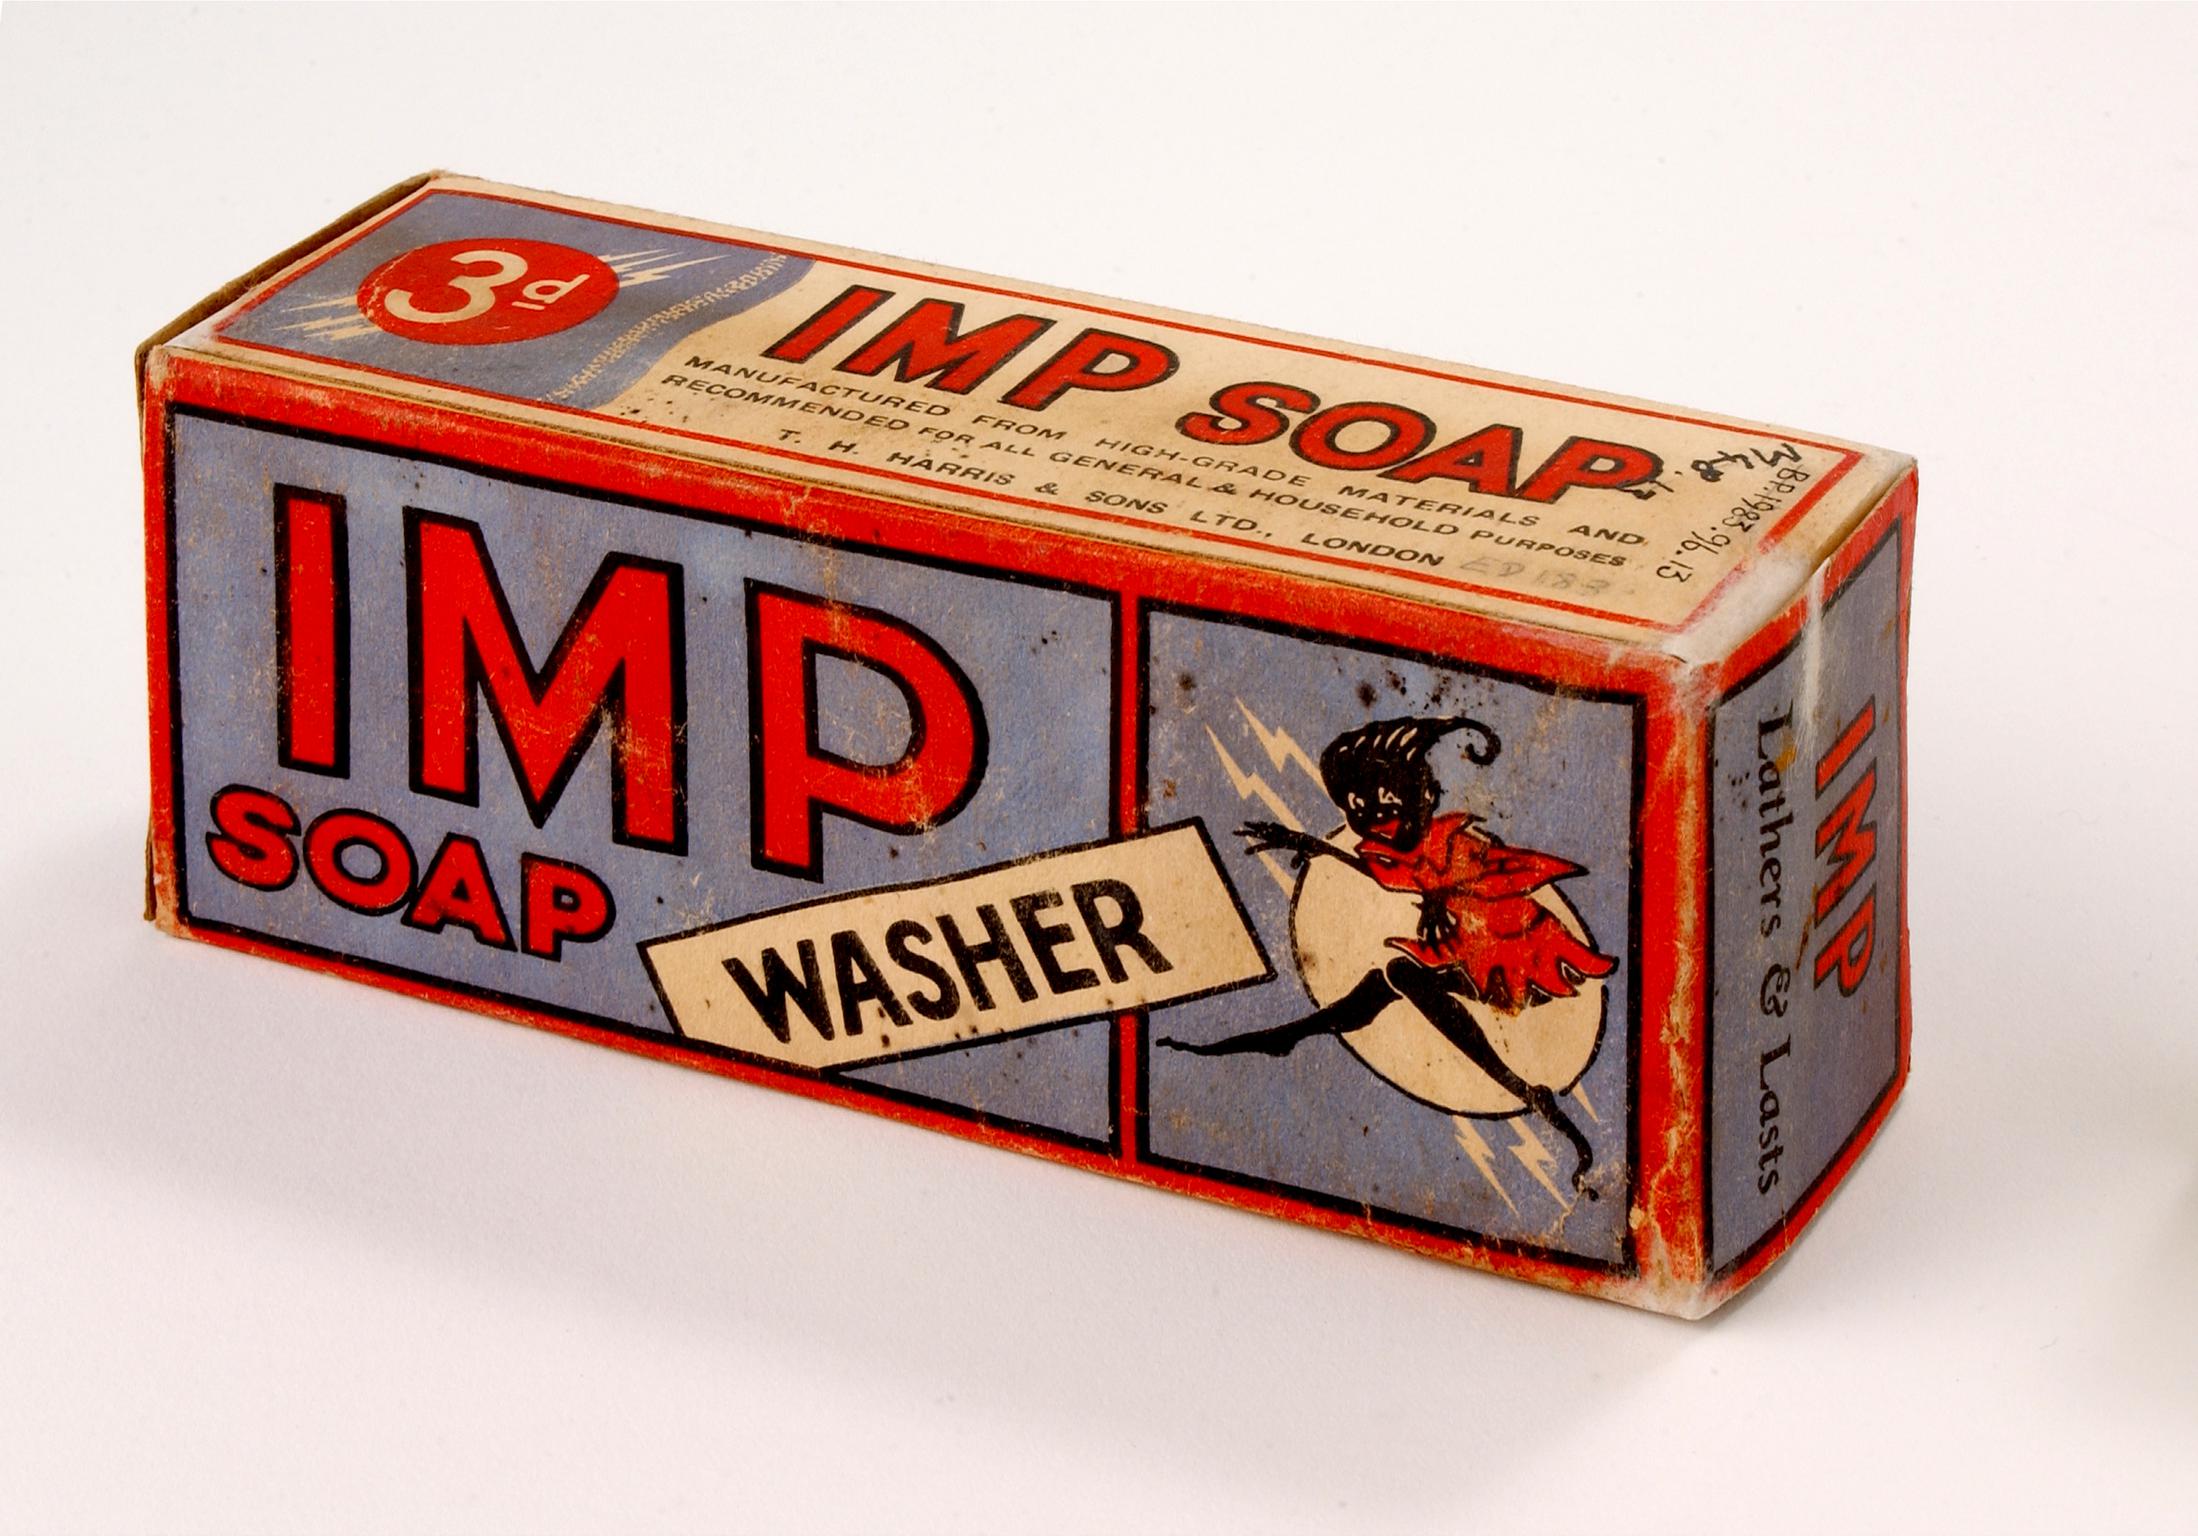 Imp soap carton